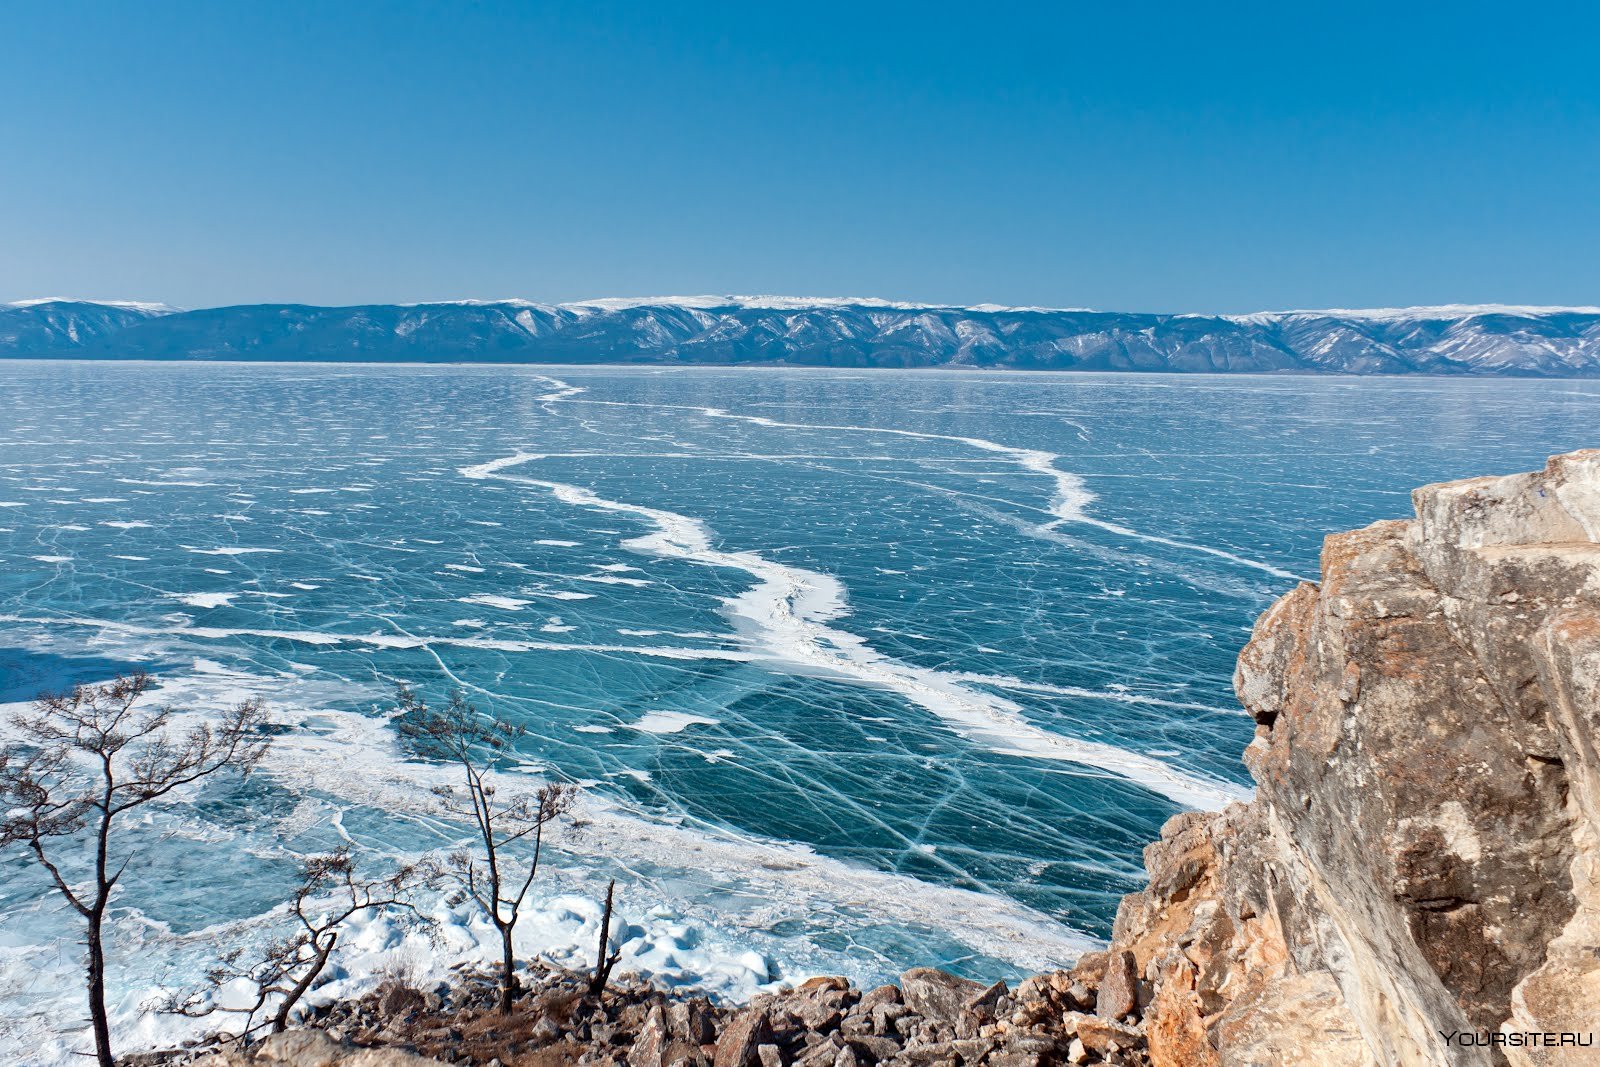 Озеро байкал знают во всем мире. Зимний Байкал Горячинск. Сибирь озеро Байкал. Евразия Байкал. Байкал ЮНЕСКО.